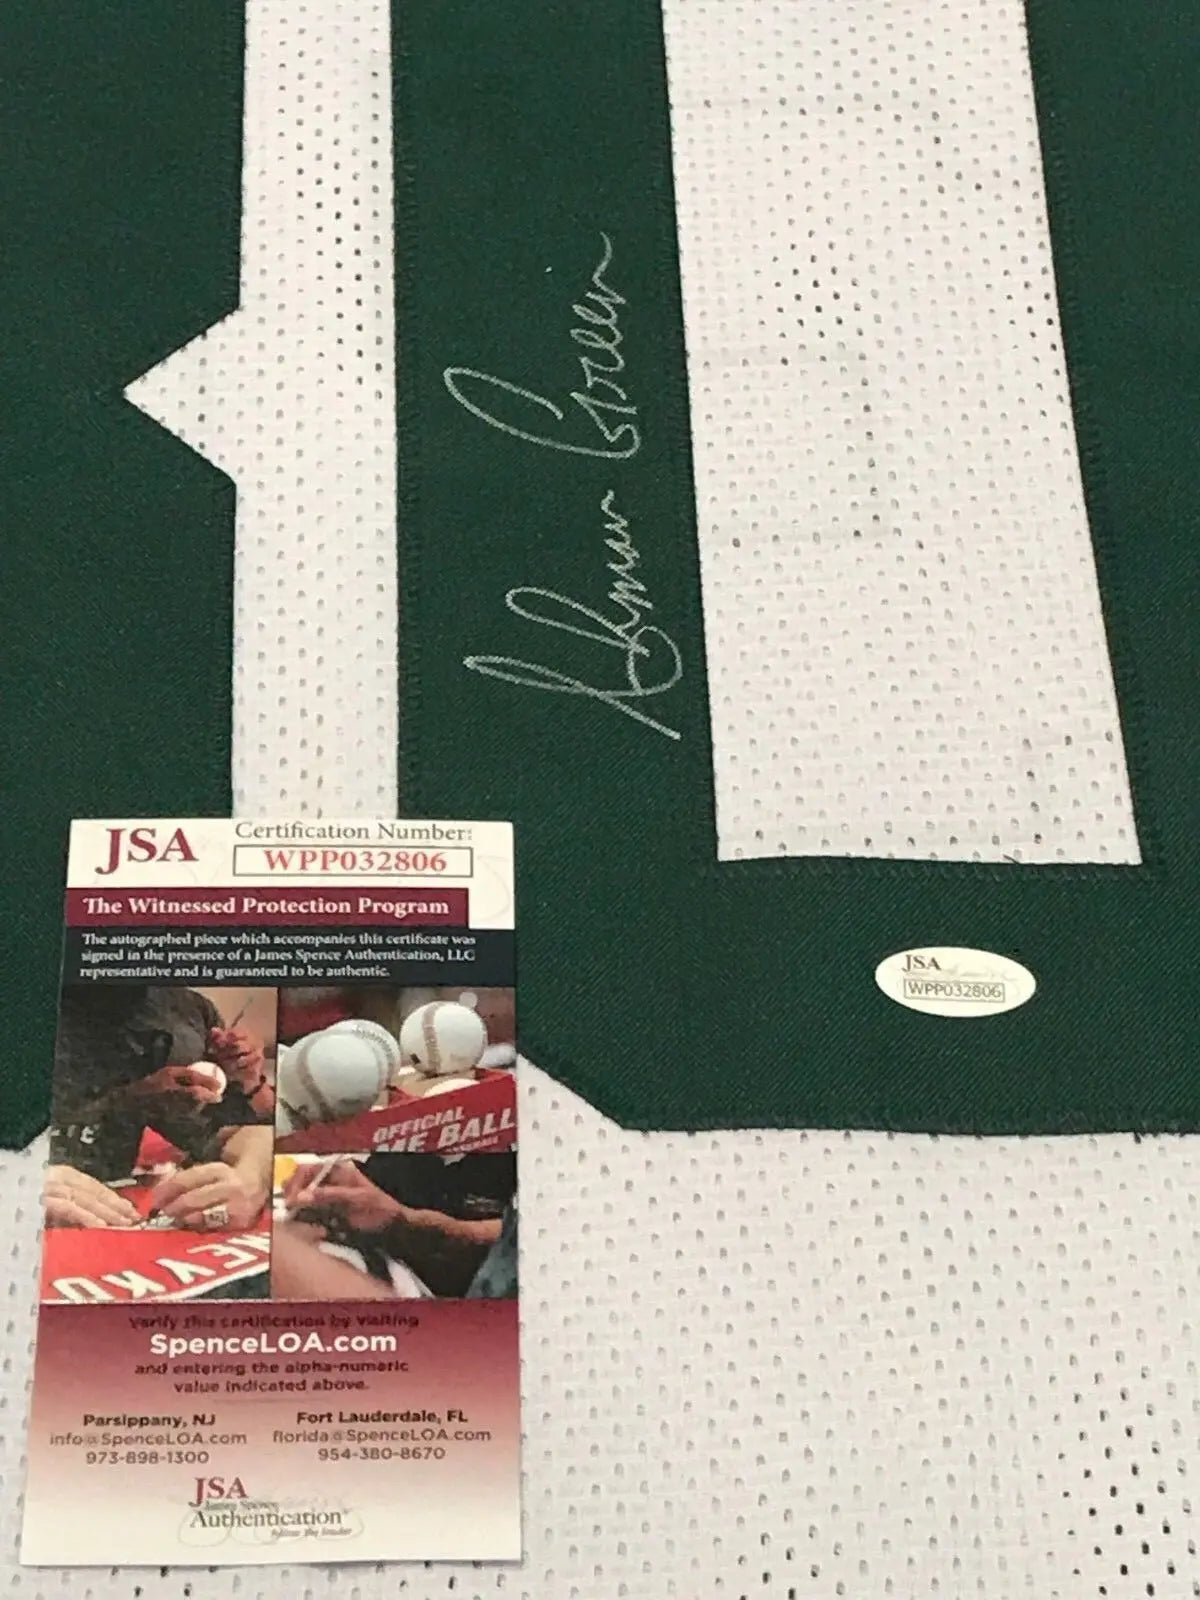 MVP Authentics Ahman Green Autographed Signed G.B. Packers Jersey Jsa  Coa 134.10 sports jersey framing , jersey framing